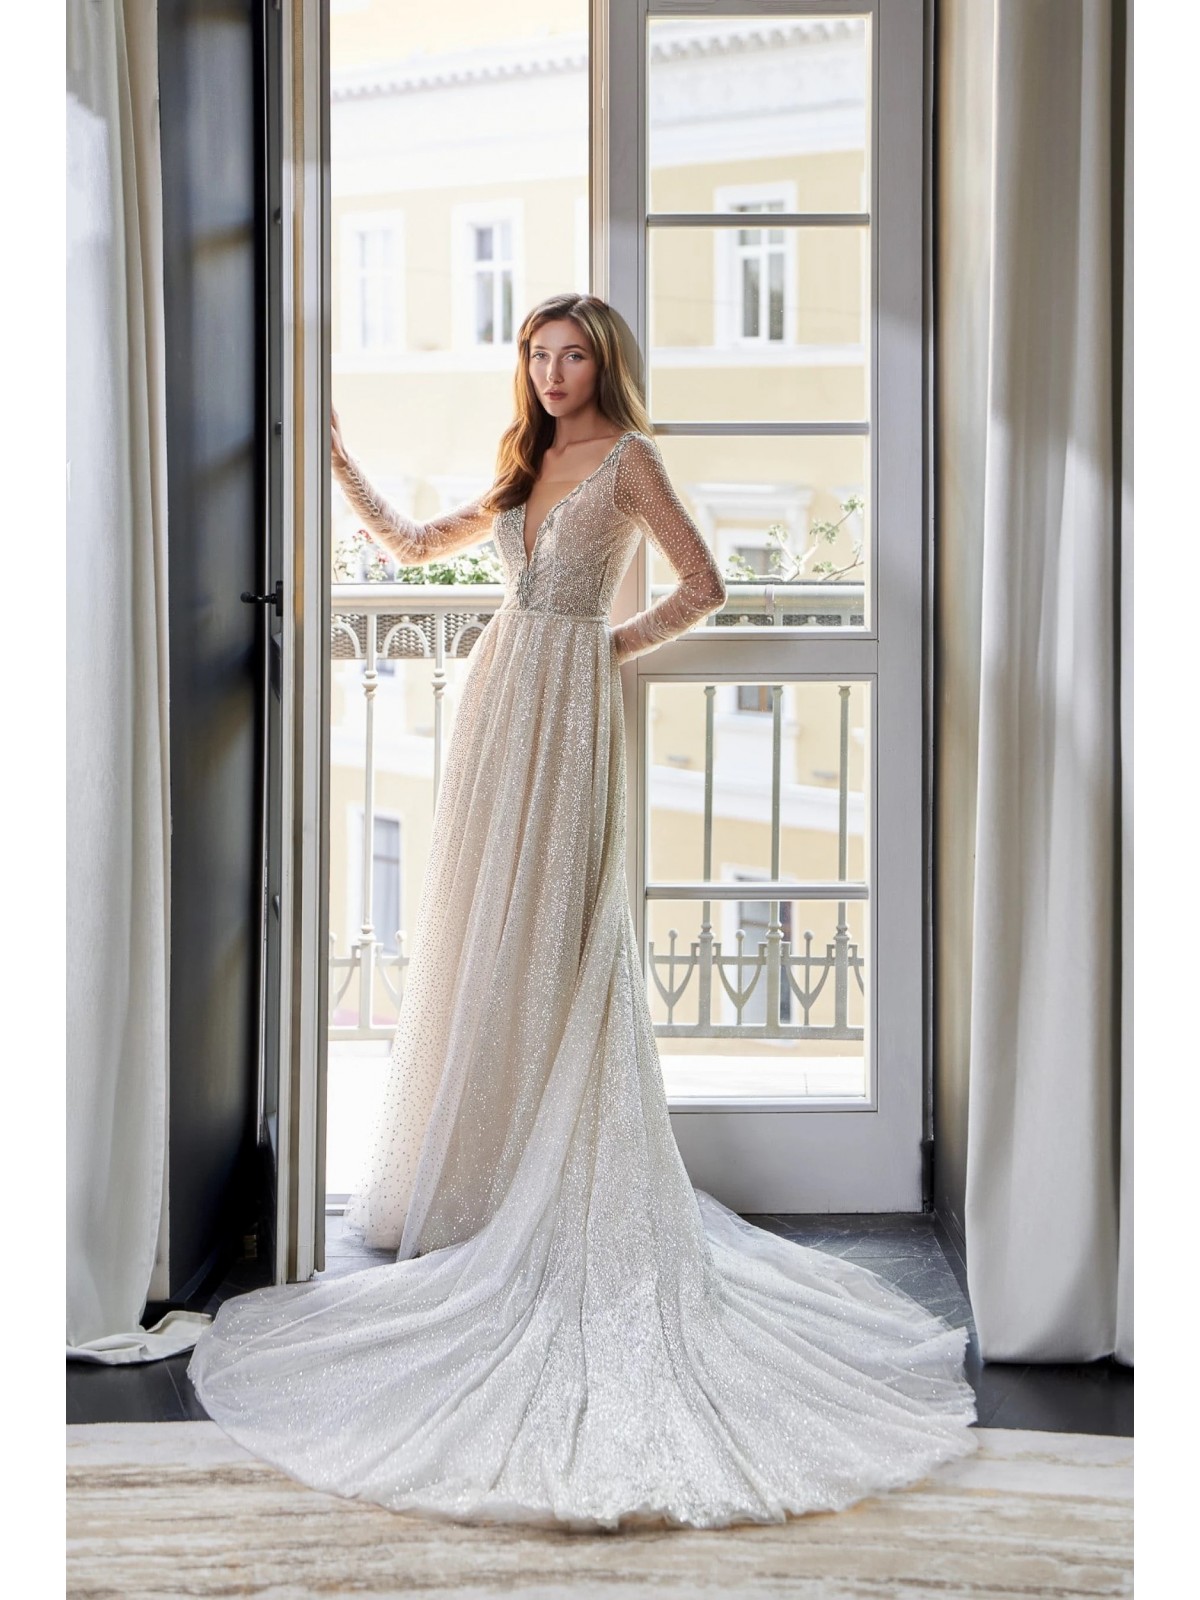 Luxury Wedding Dress - Blake - LPLD-3191.00.17